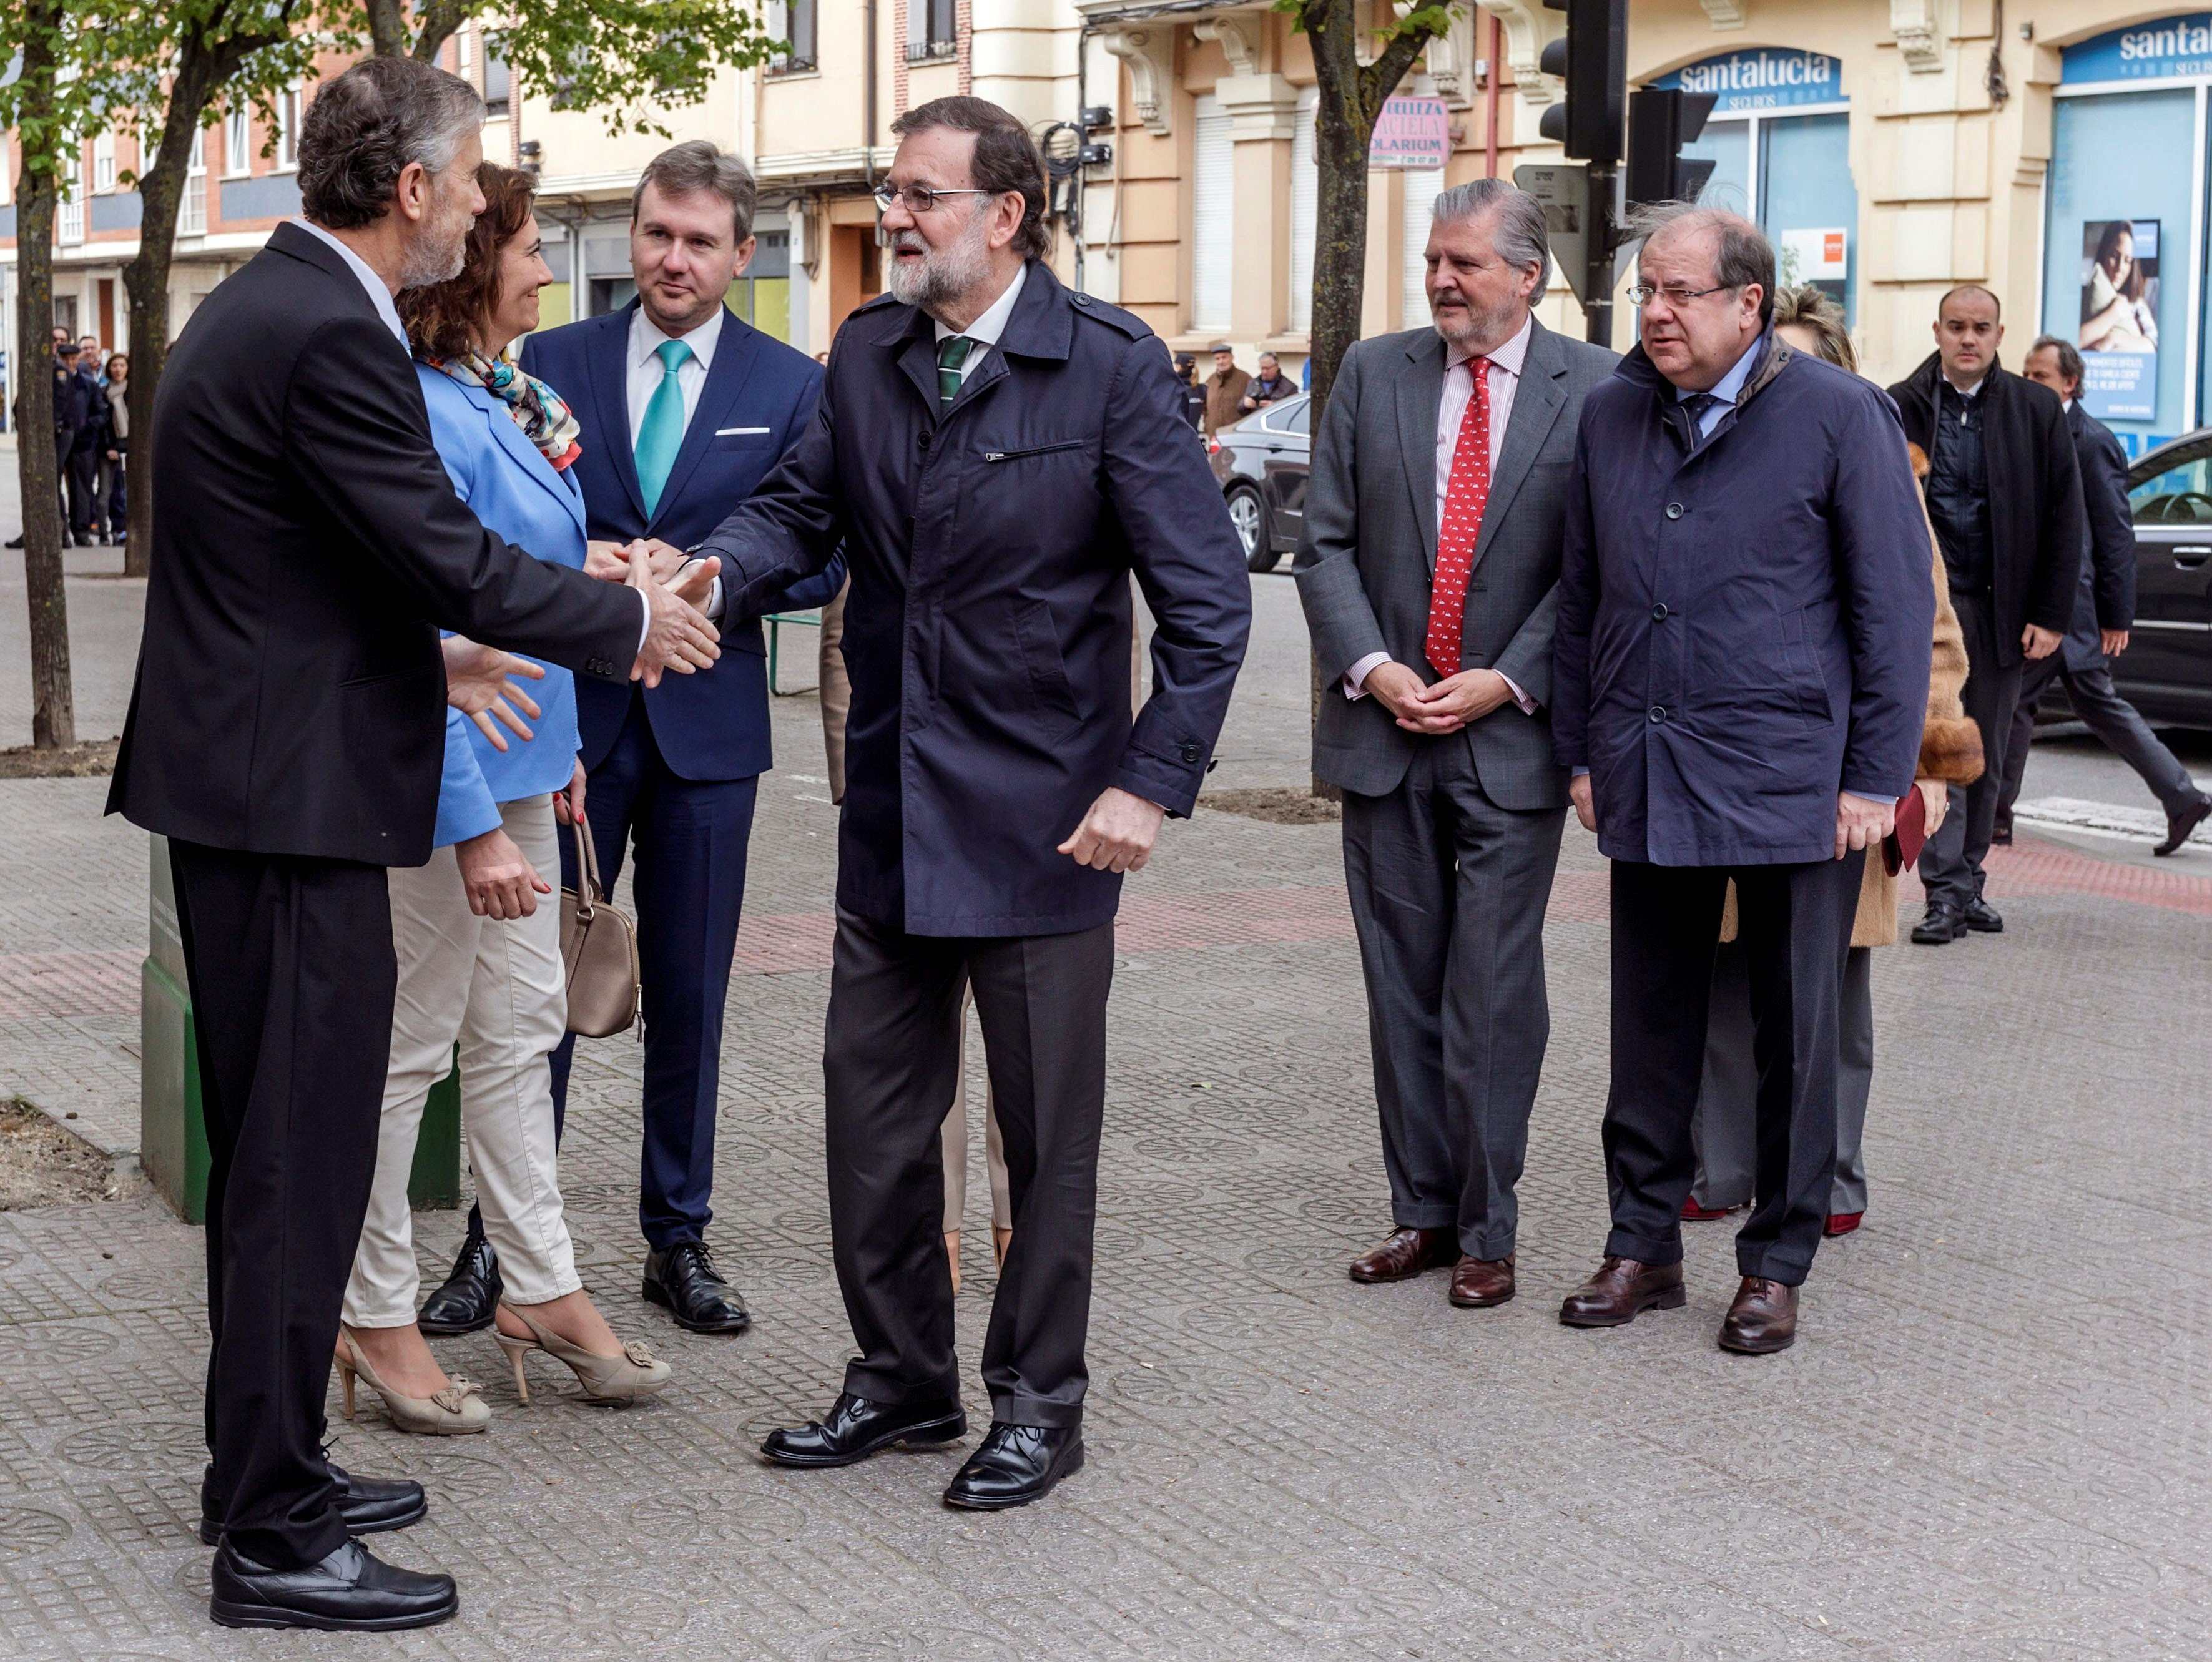 Rajoy booed in Burgos